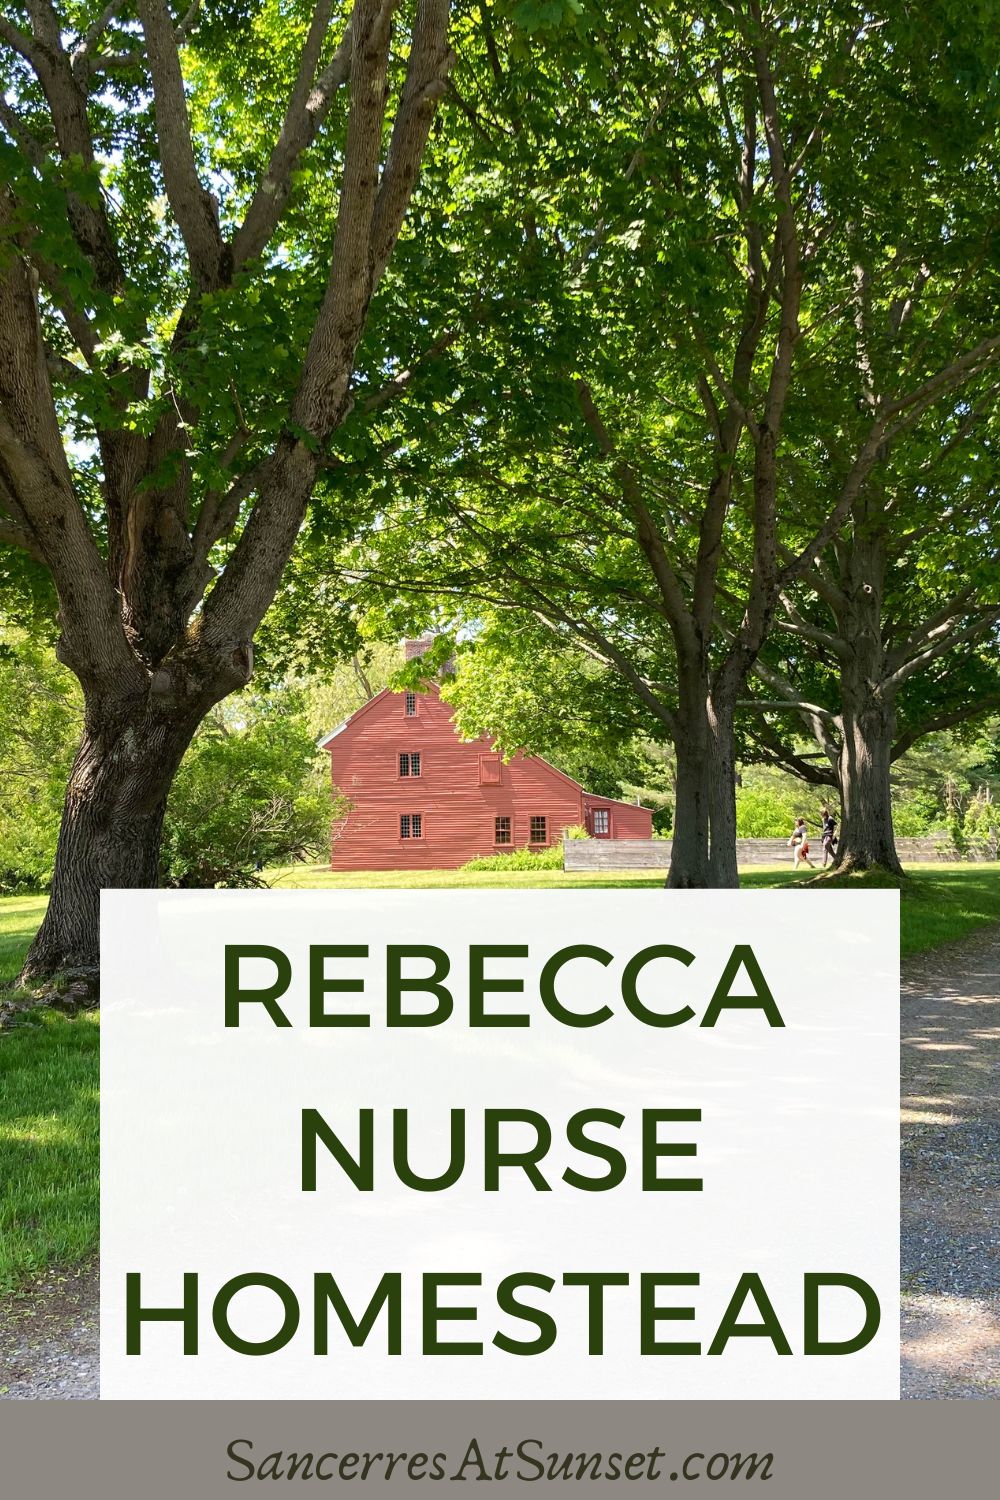 Rebecca Nurse Homestead in Danvers, Massachusetts